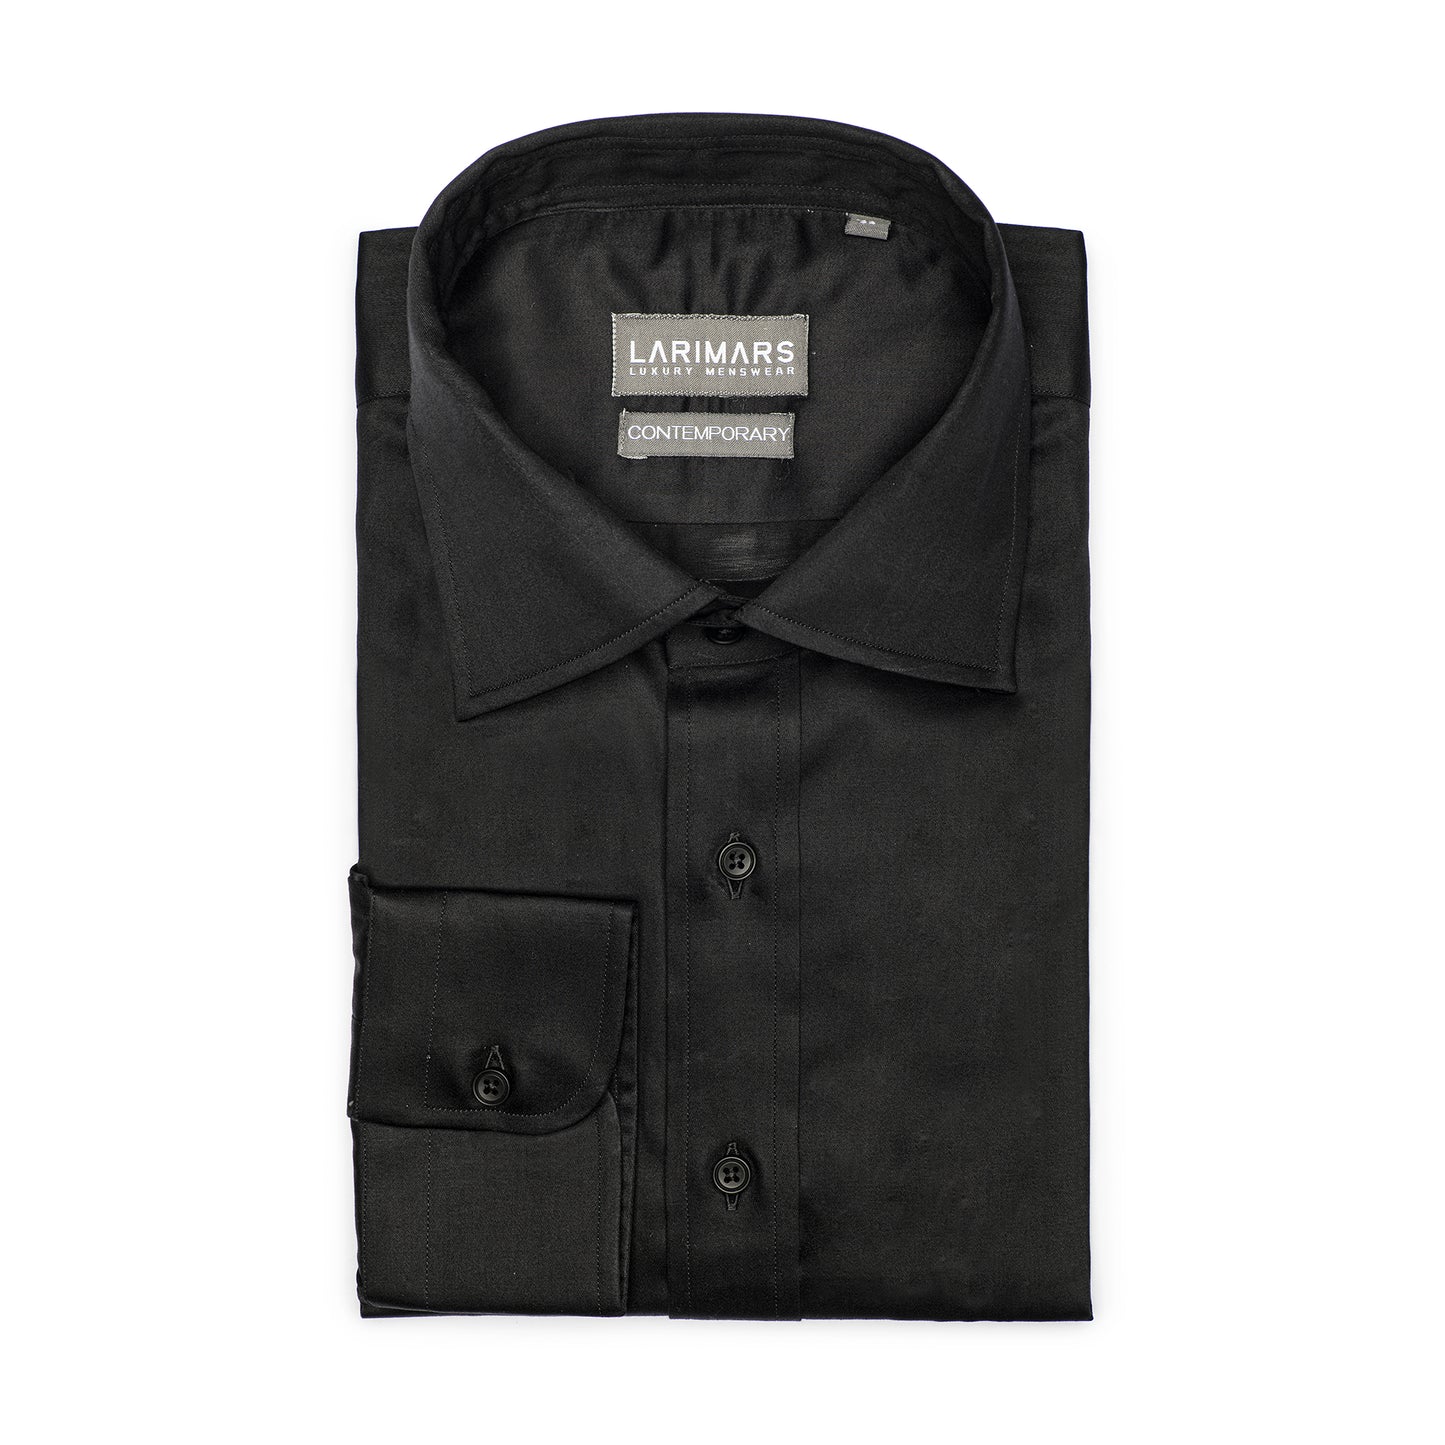 Solid Black Cotton Shirt for Men